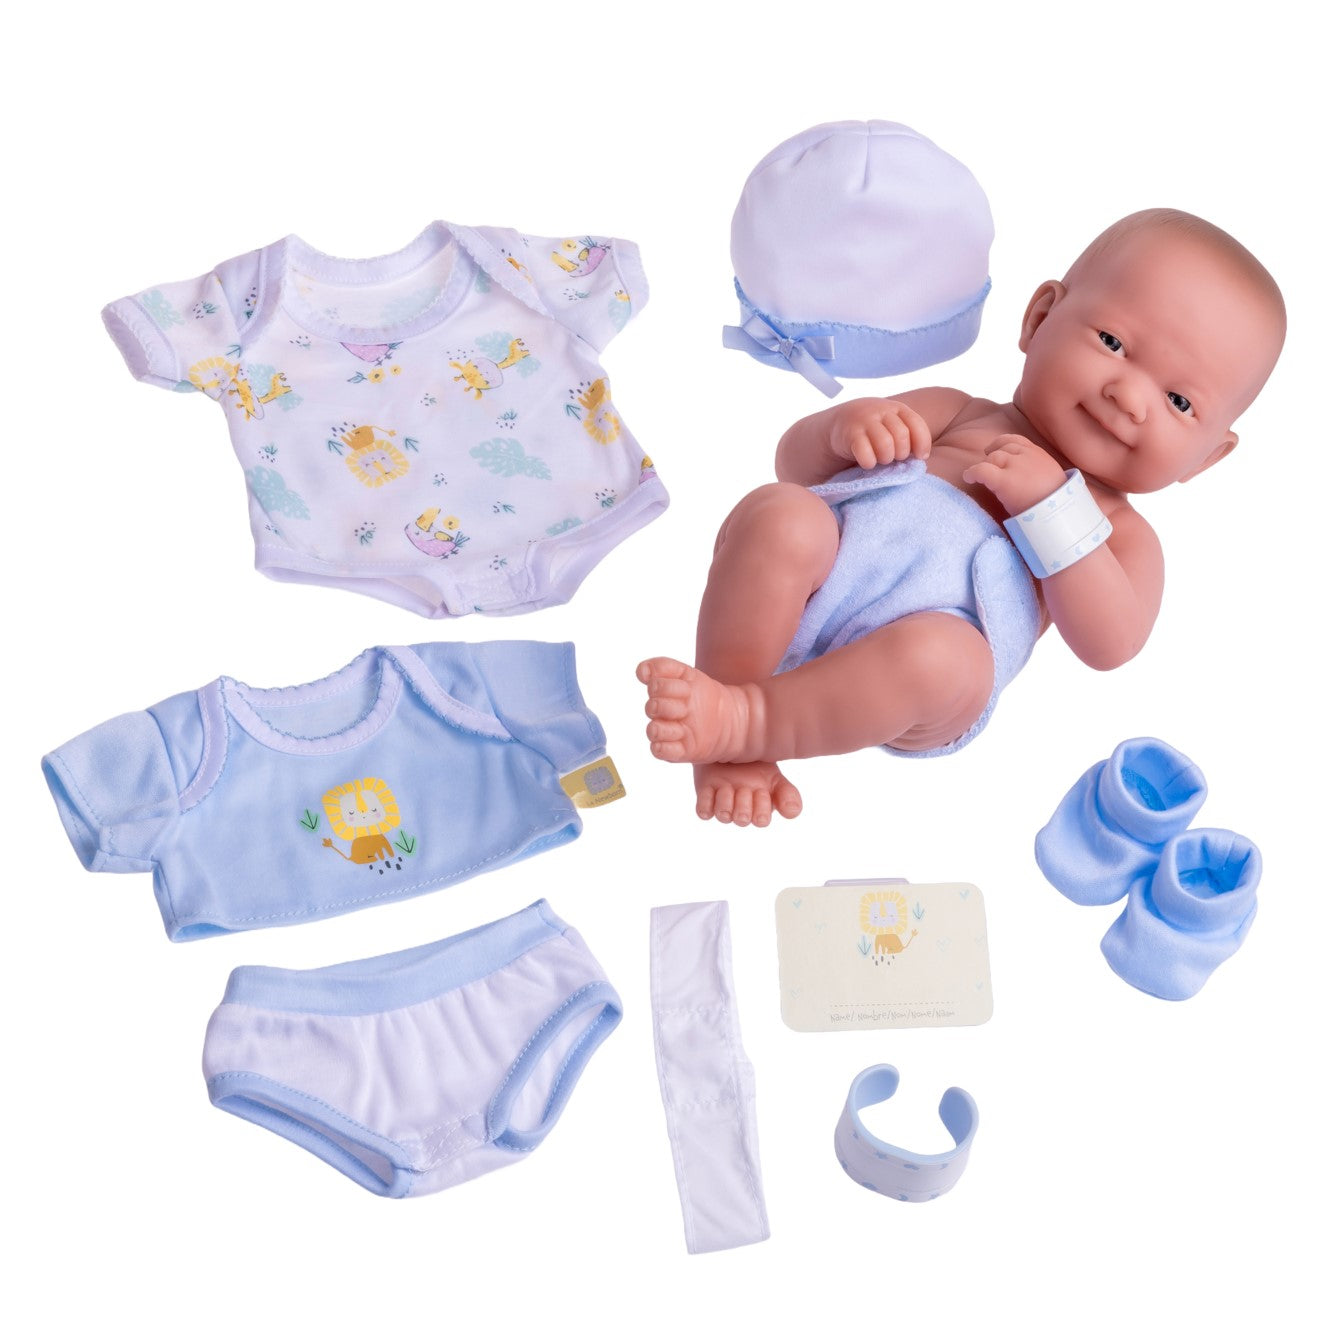 10-Piece Silicone Baby Feeding Set - Blue – thelittleroom